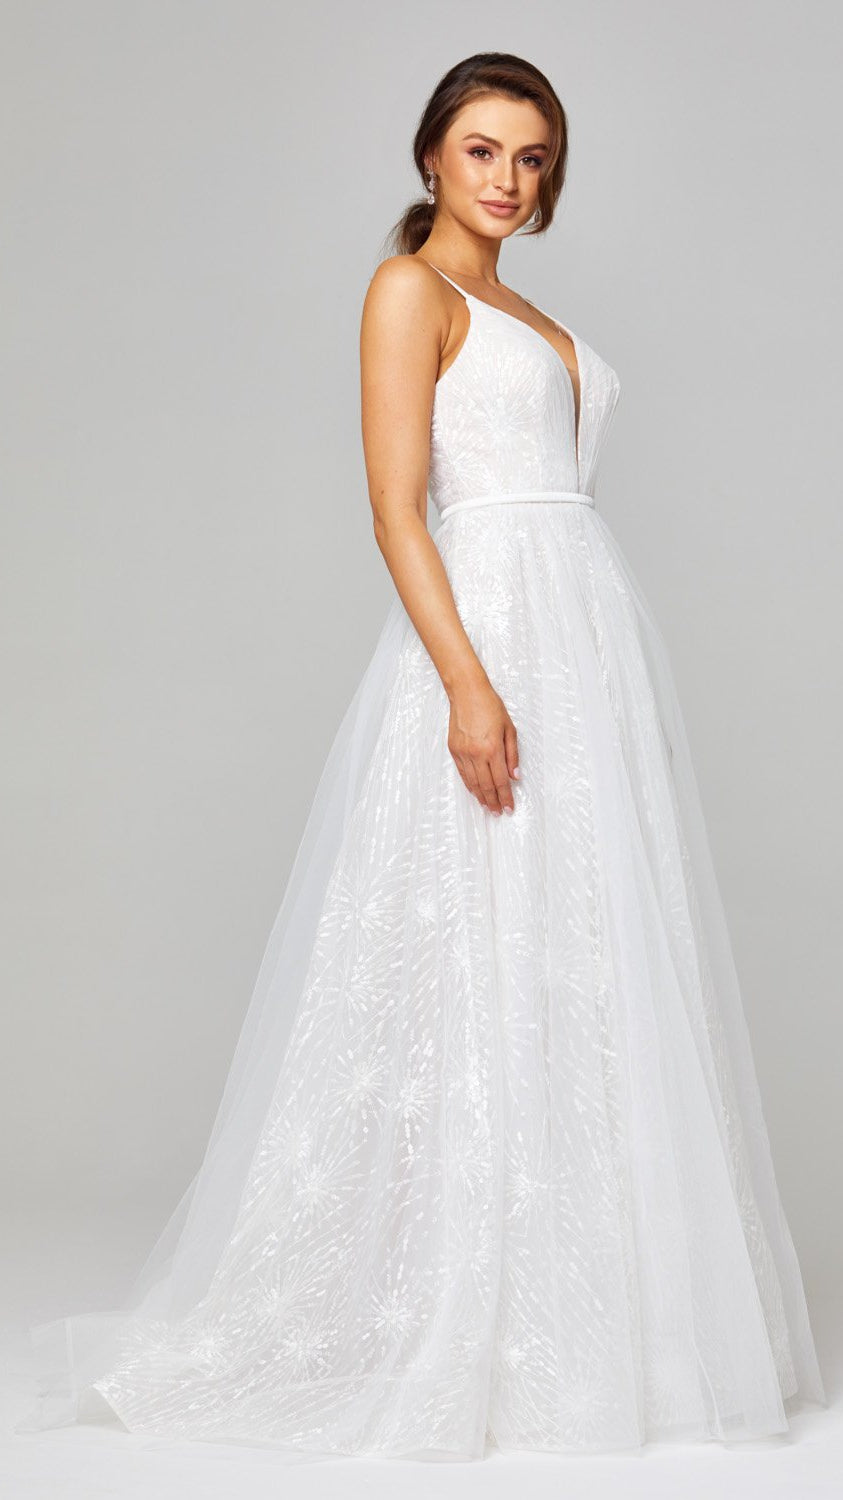 Belle TC309 Wedding Dress